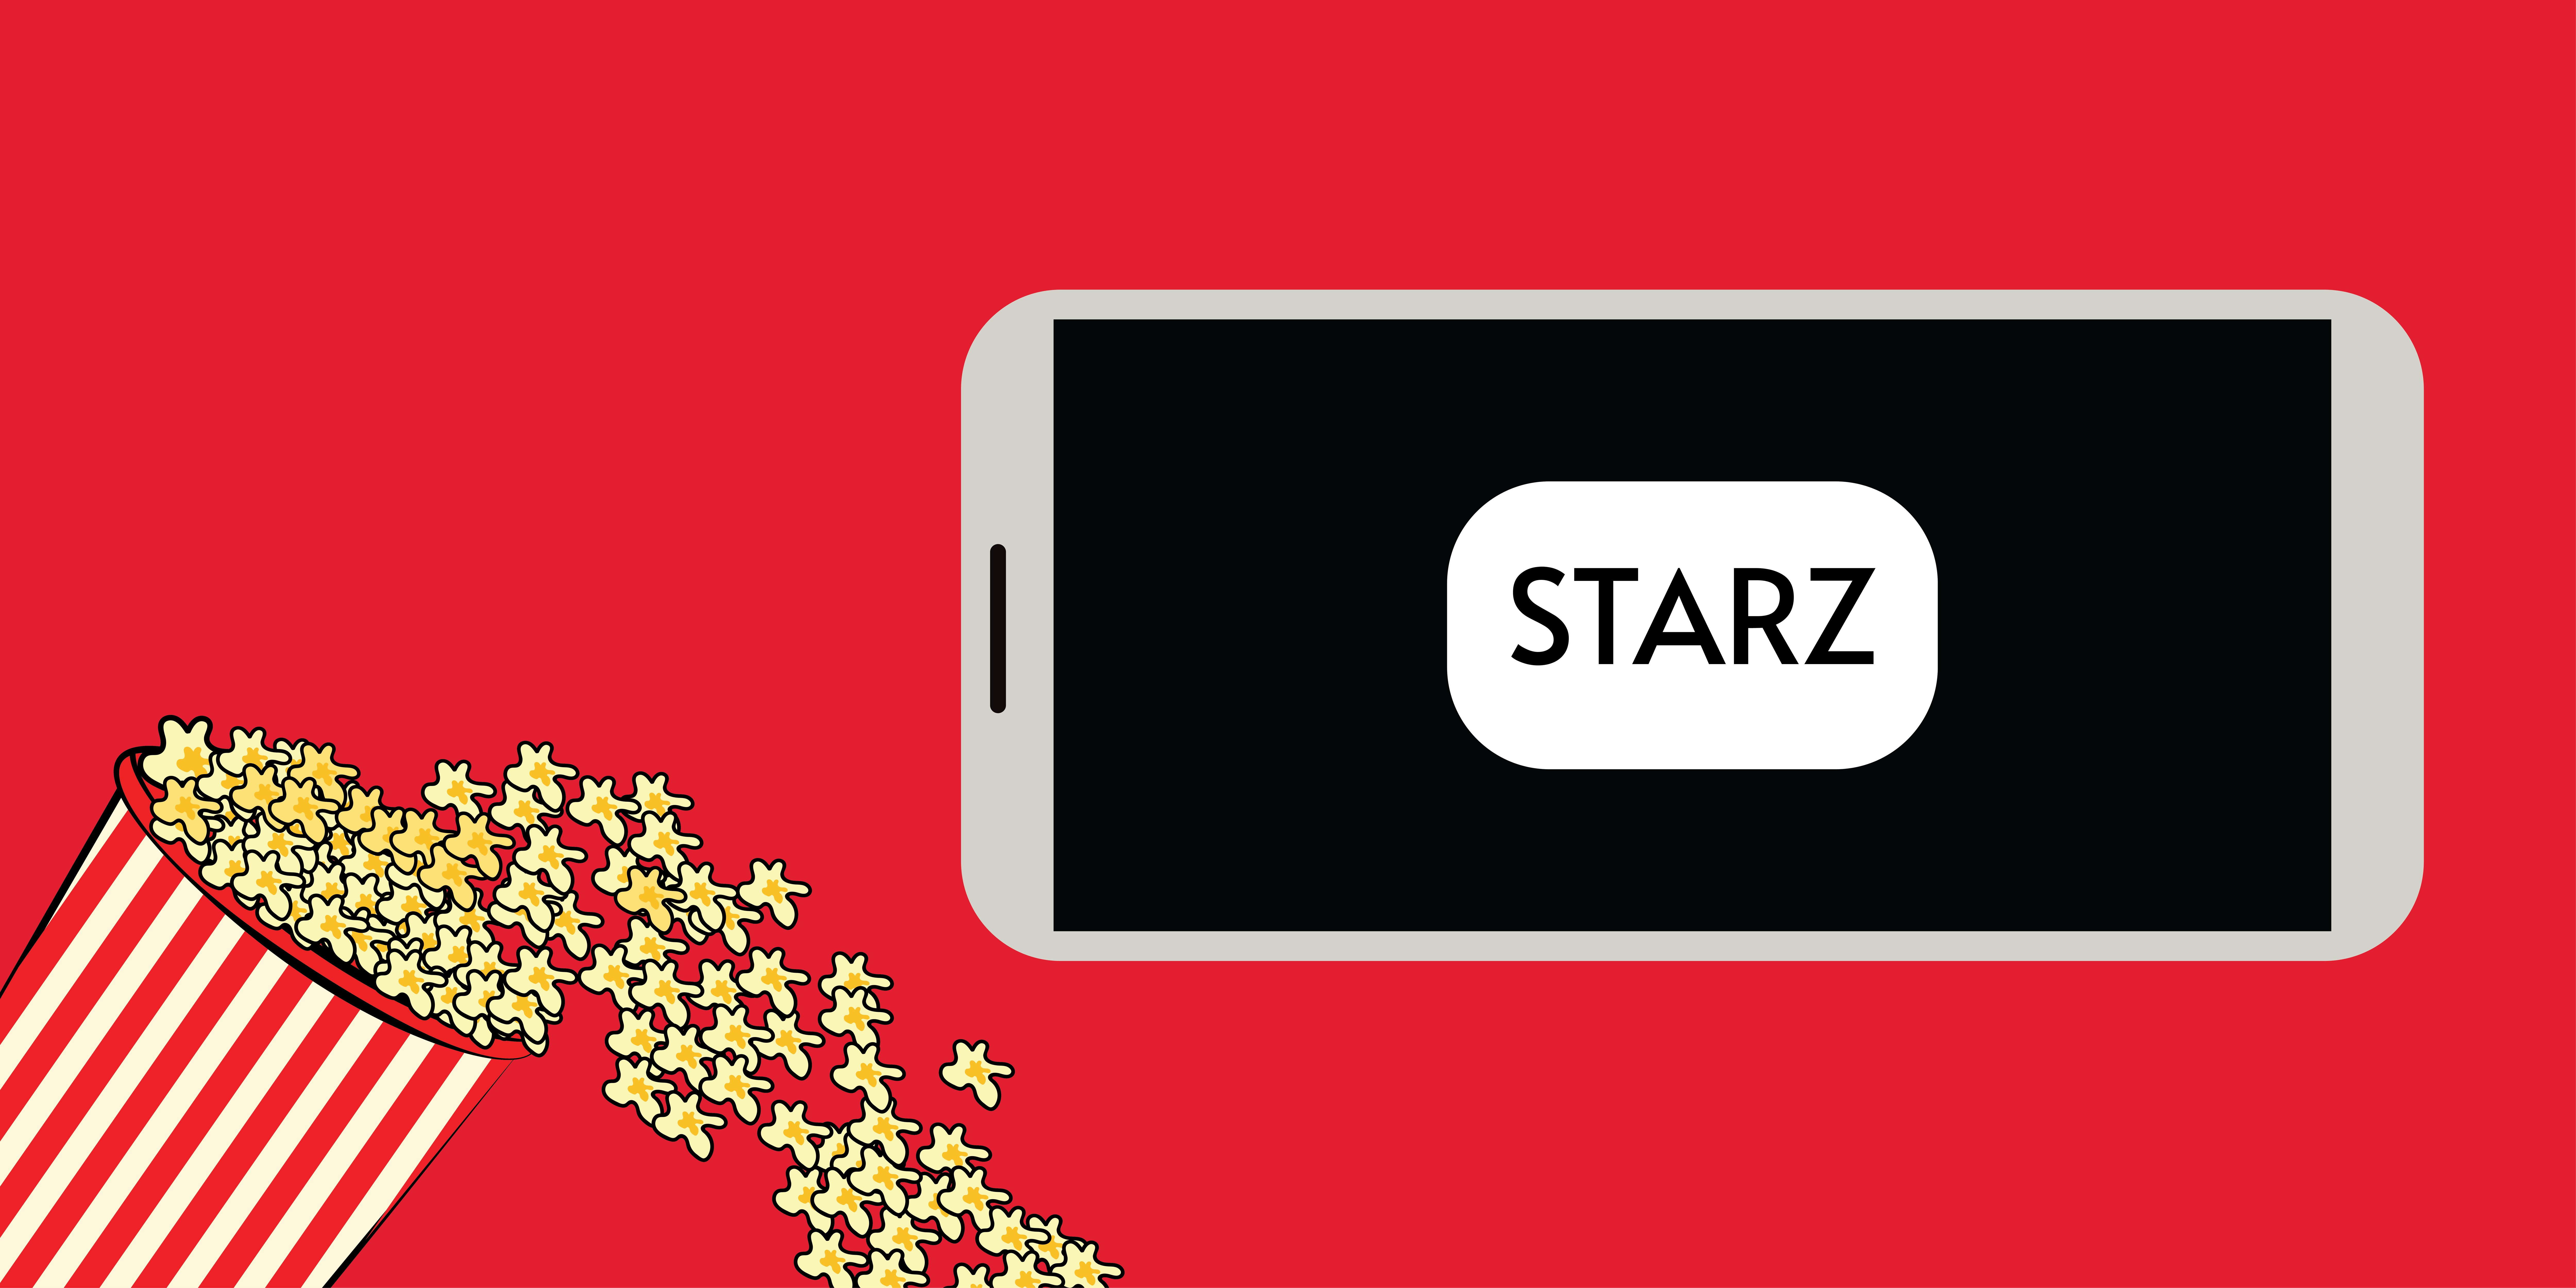 Starz streamer's logo illustration